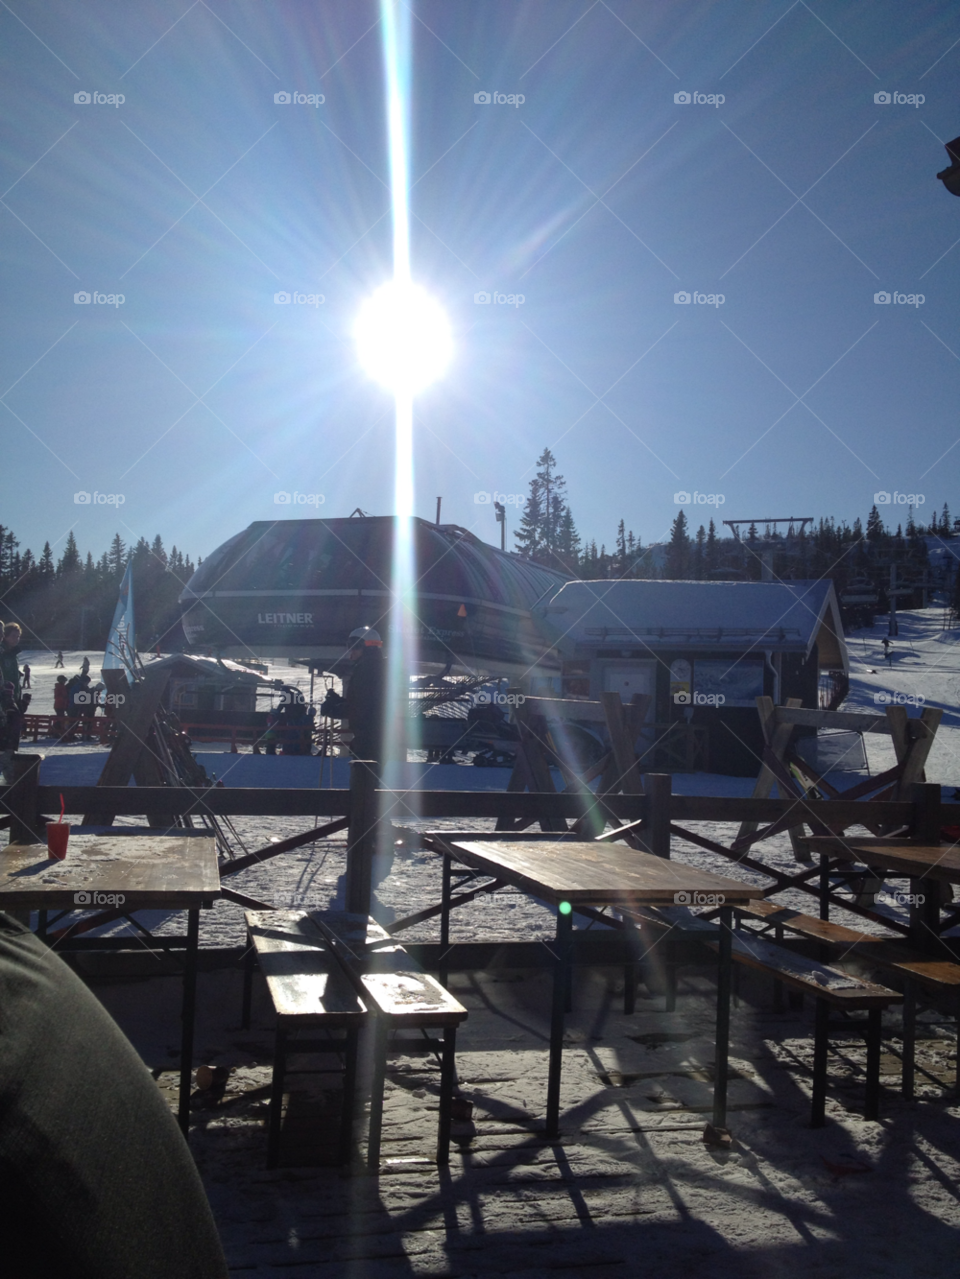 sun winter skii afterski snow coffe break lift mountain by 08stockholm